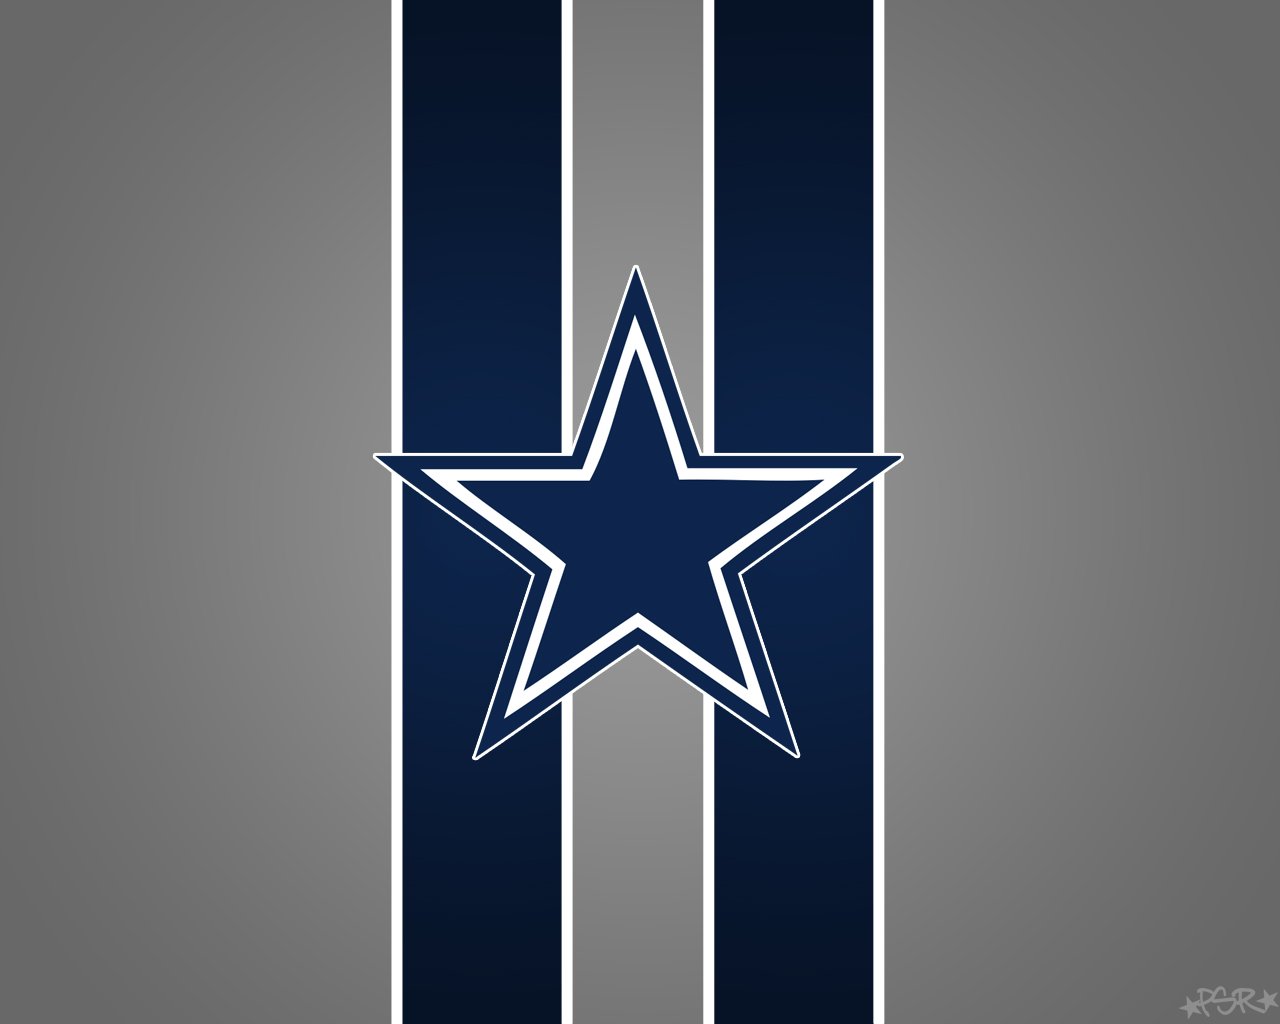  this new Dallas Cowboys desktop background Dallas Cowboys wallpapers 1280x1024